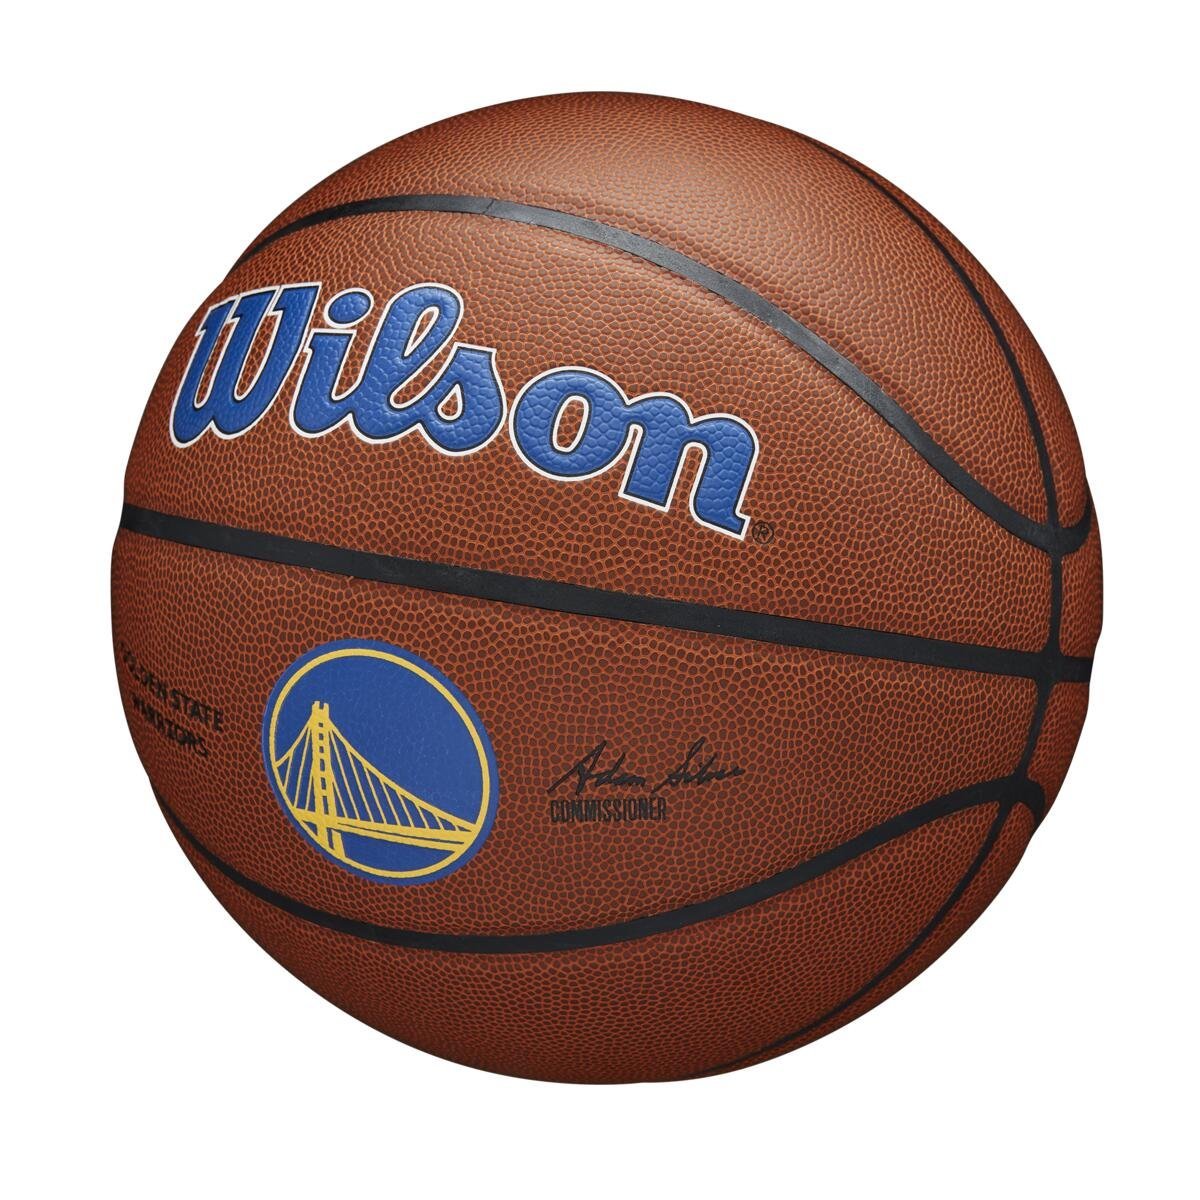 Lopta Wilson NBA Team Alliance Gs Warriors - hnedá